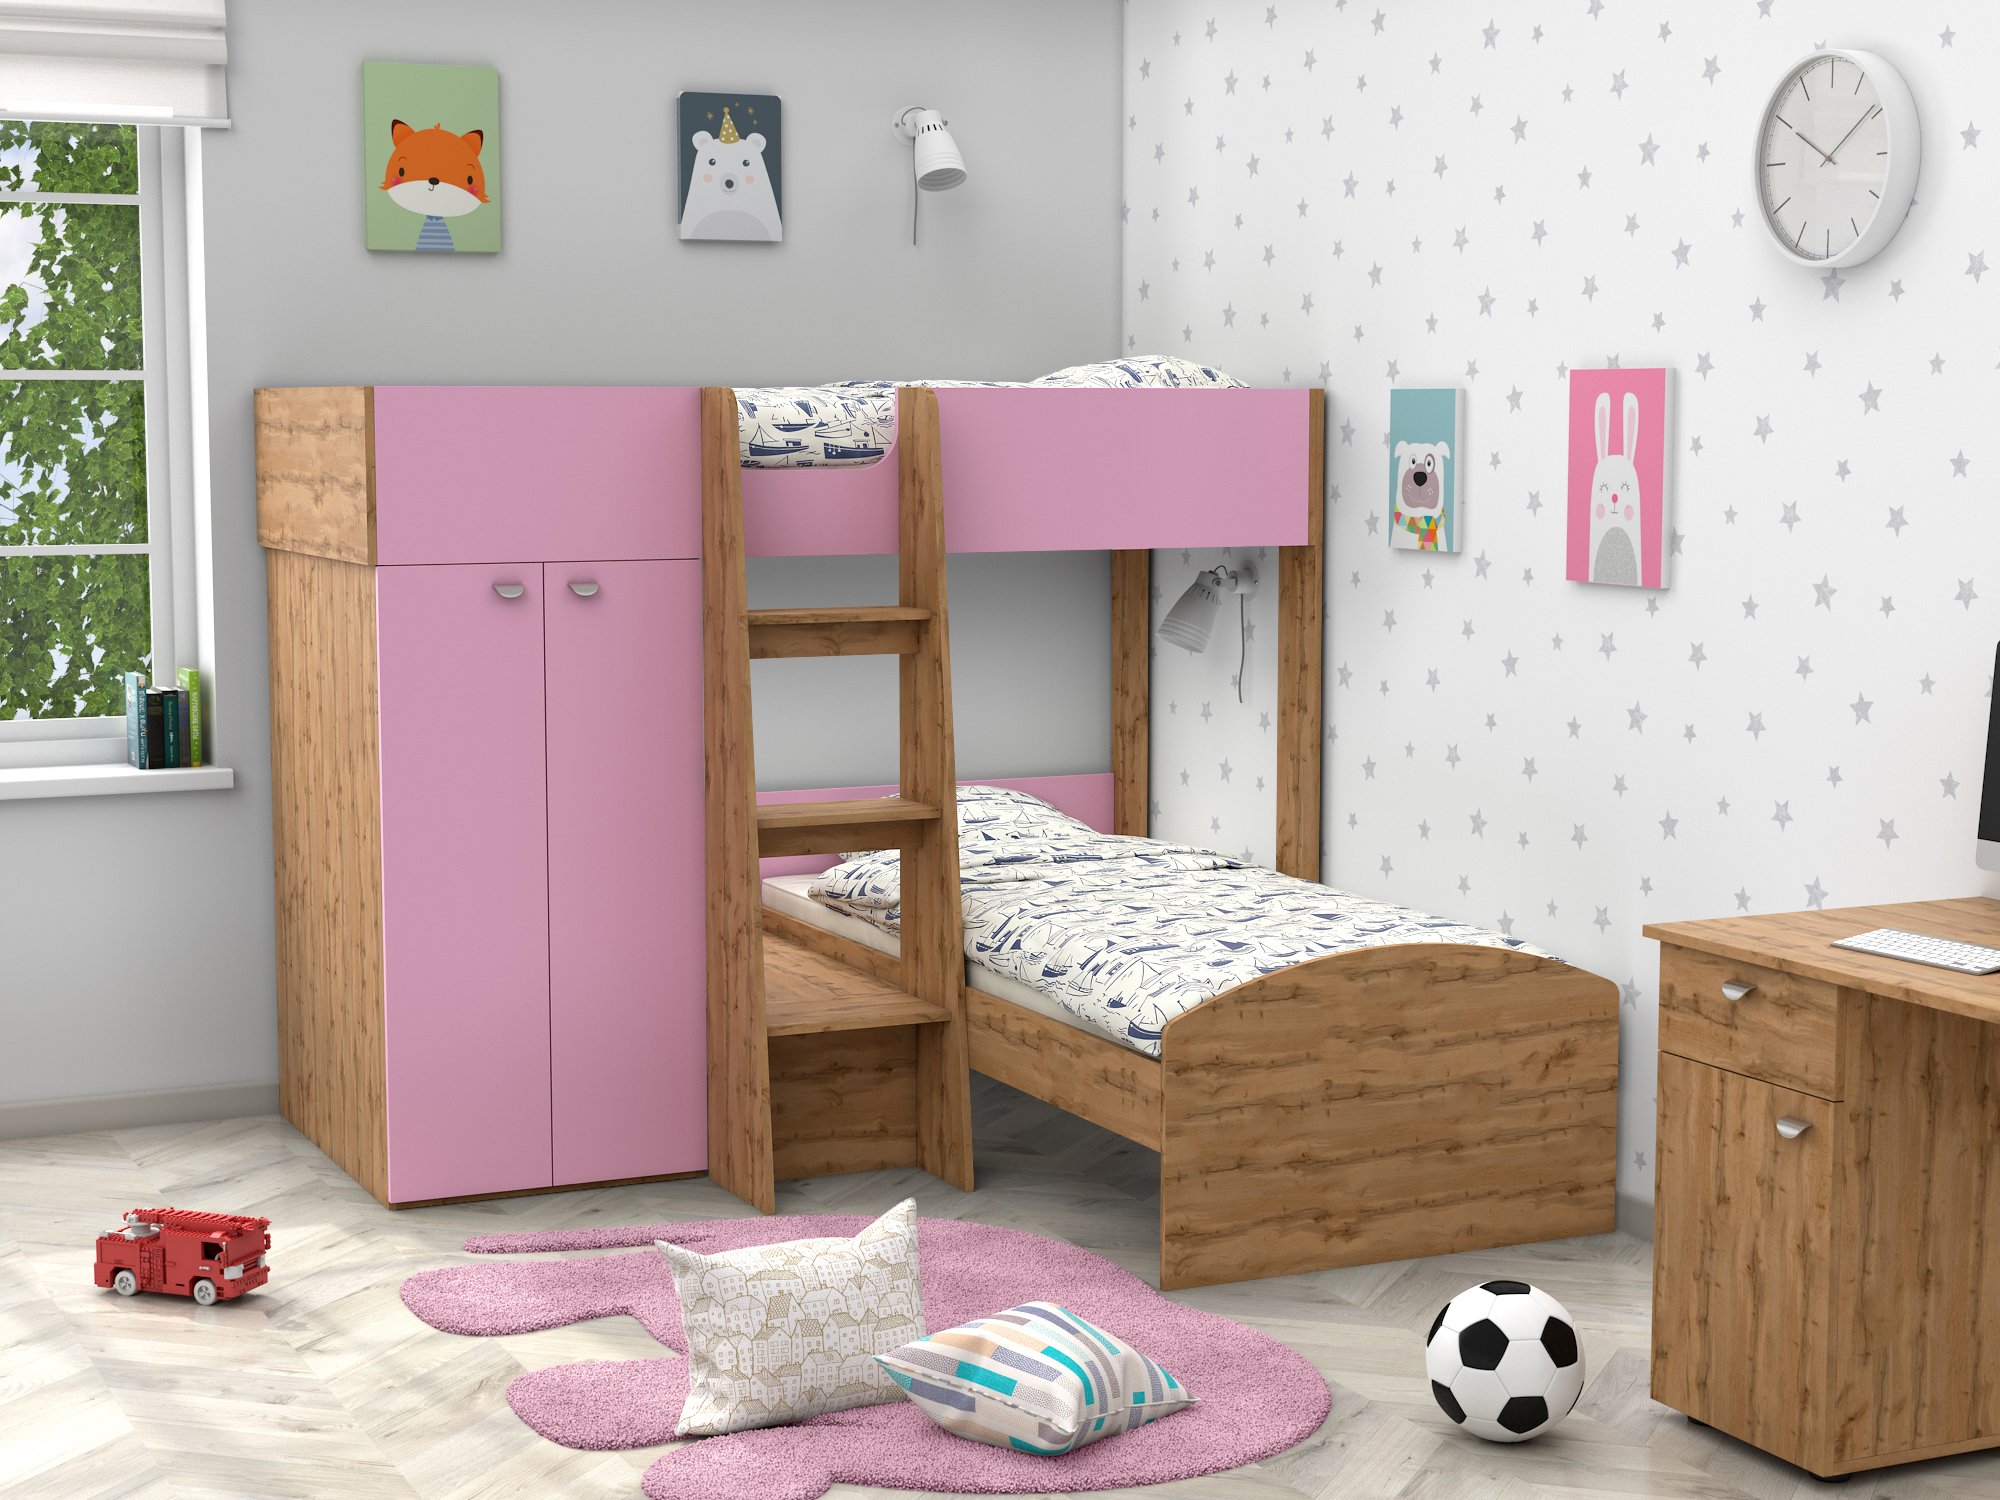 Двухъярусная кровать Golden Kids-4 (90х200) Розовый, Бежевый, ЛДСП двухъярусная кровать golden kids 4 90х200 бежевый коричневый темный лдсп